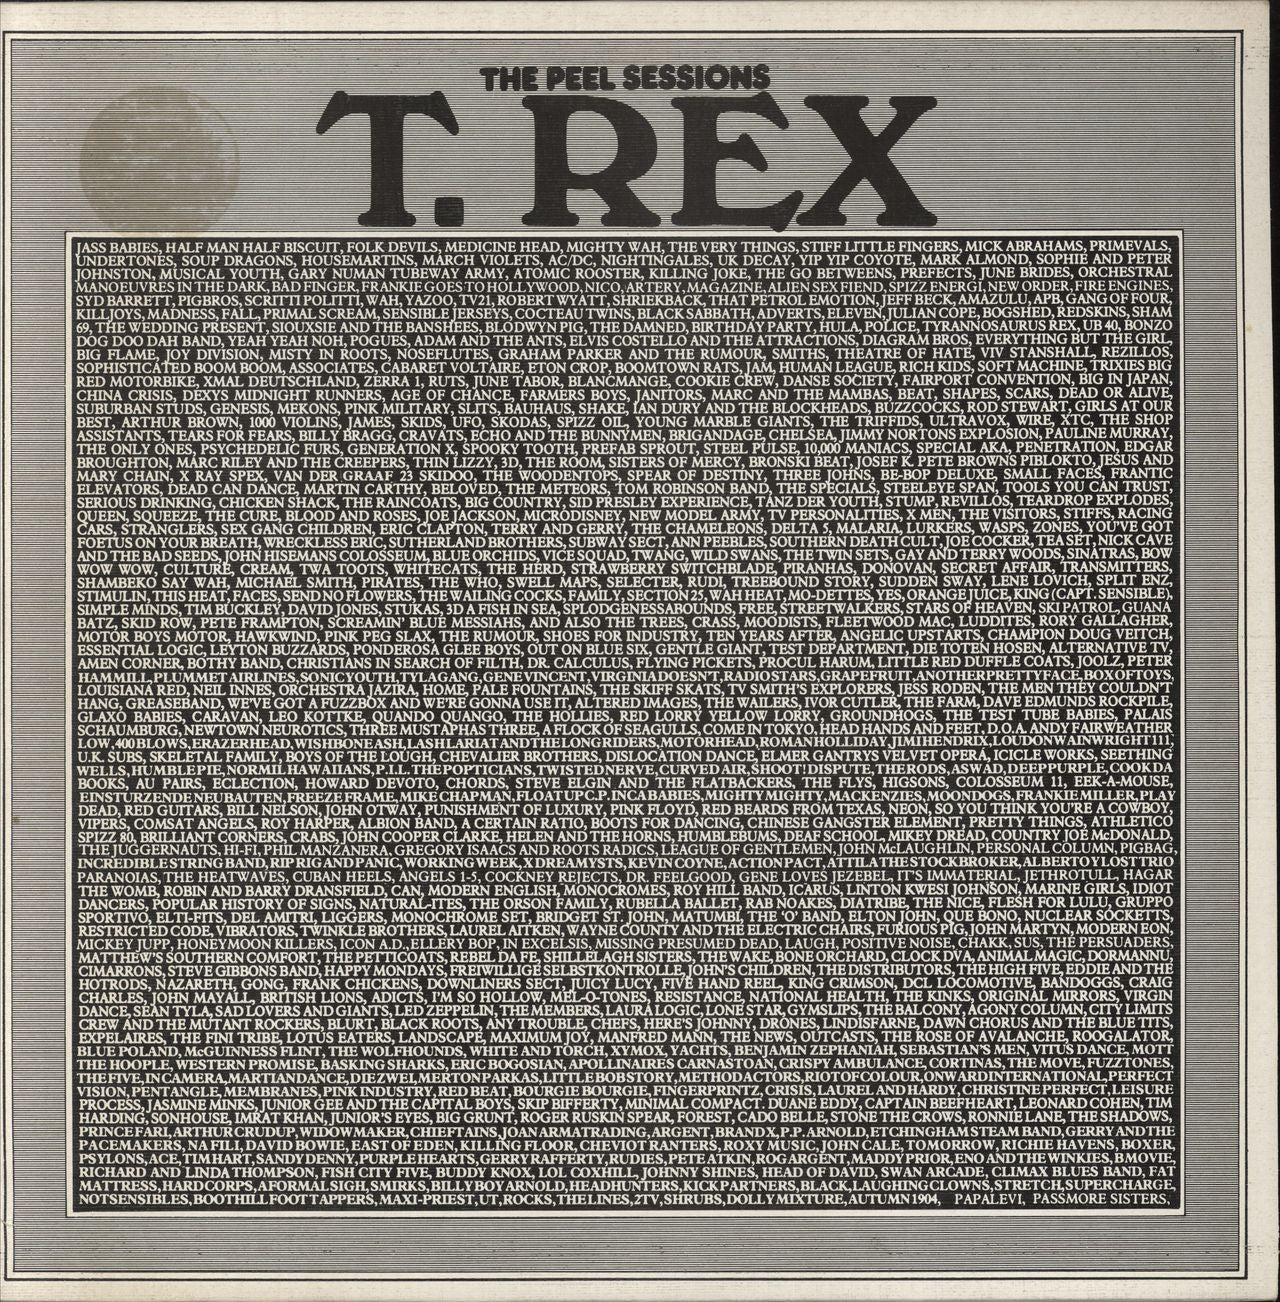 T-Rex / Tyrannosaurus Rex The Peel Sessions EP UK 12" vinyl single (12 inch record / Maxi-single) SFPS031